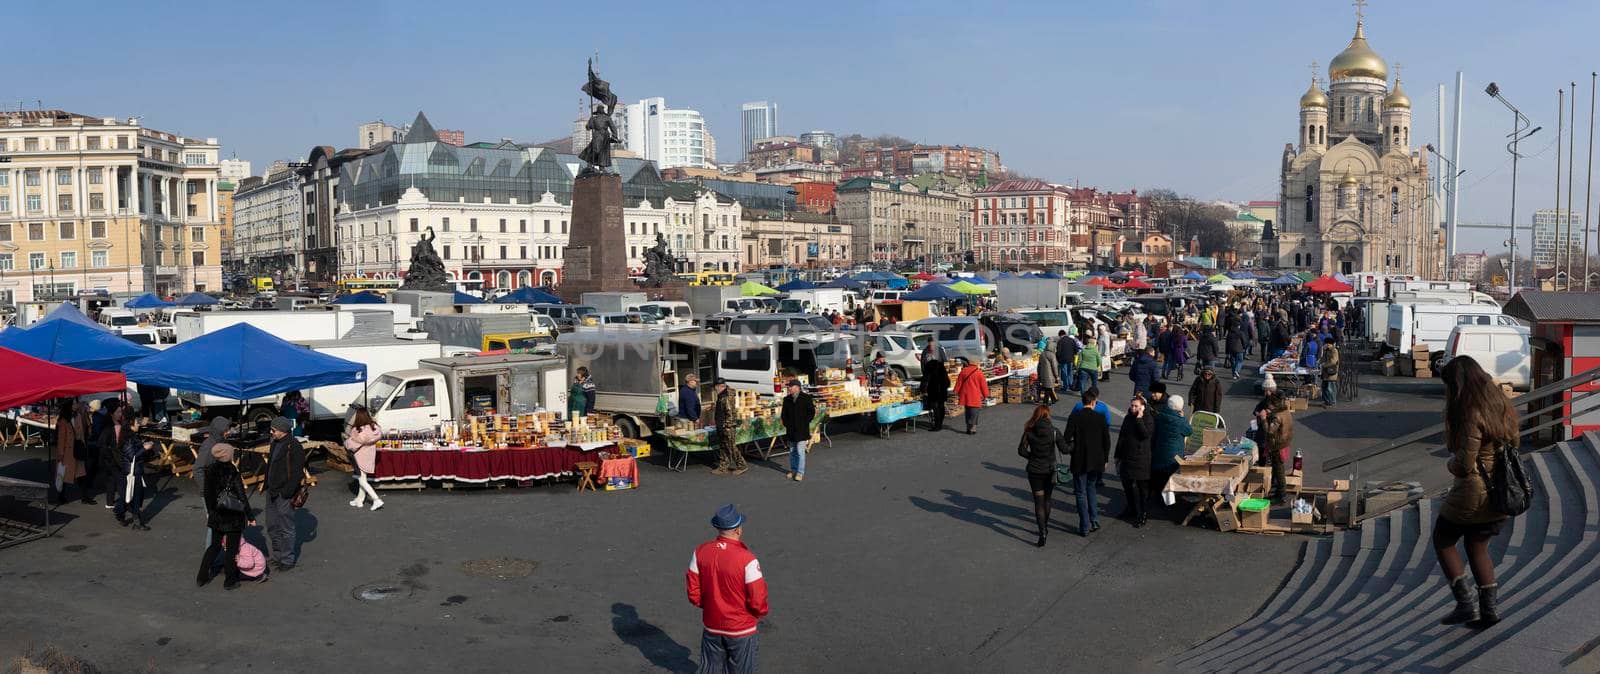 Vladivostok, Primorsky Krai-March 2, 2019: Trade fair on the main square of the city.